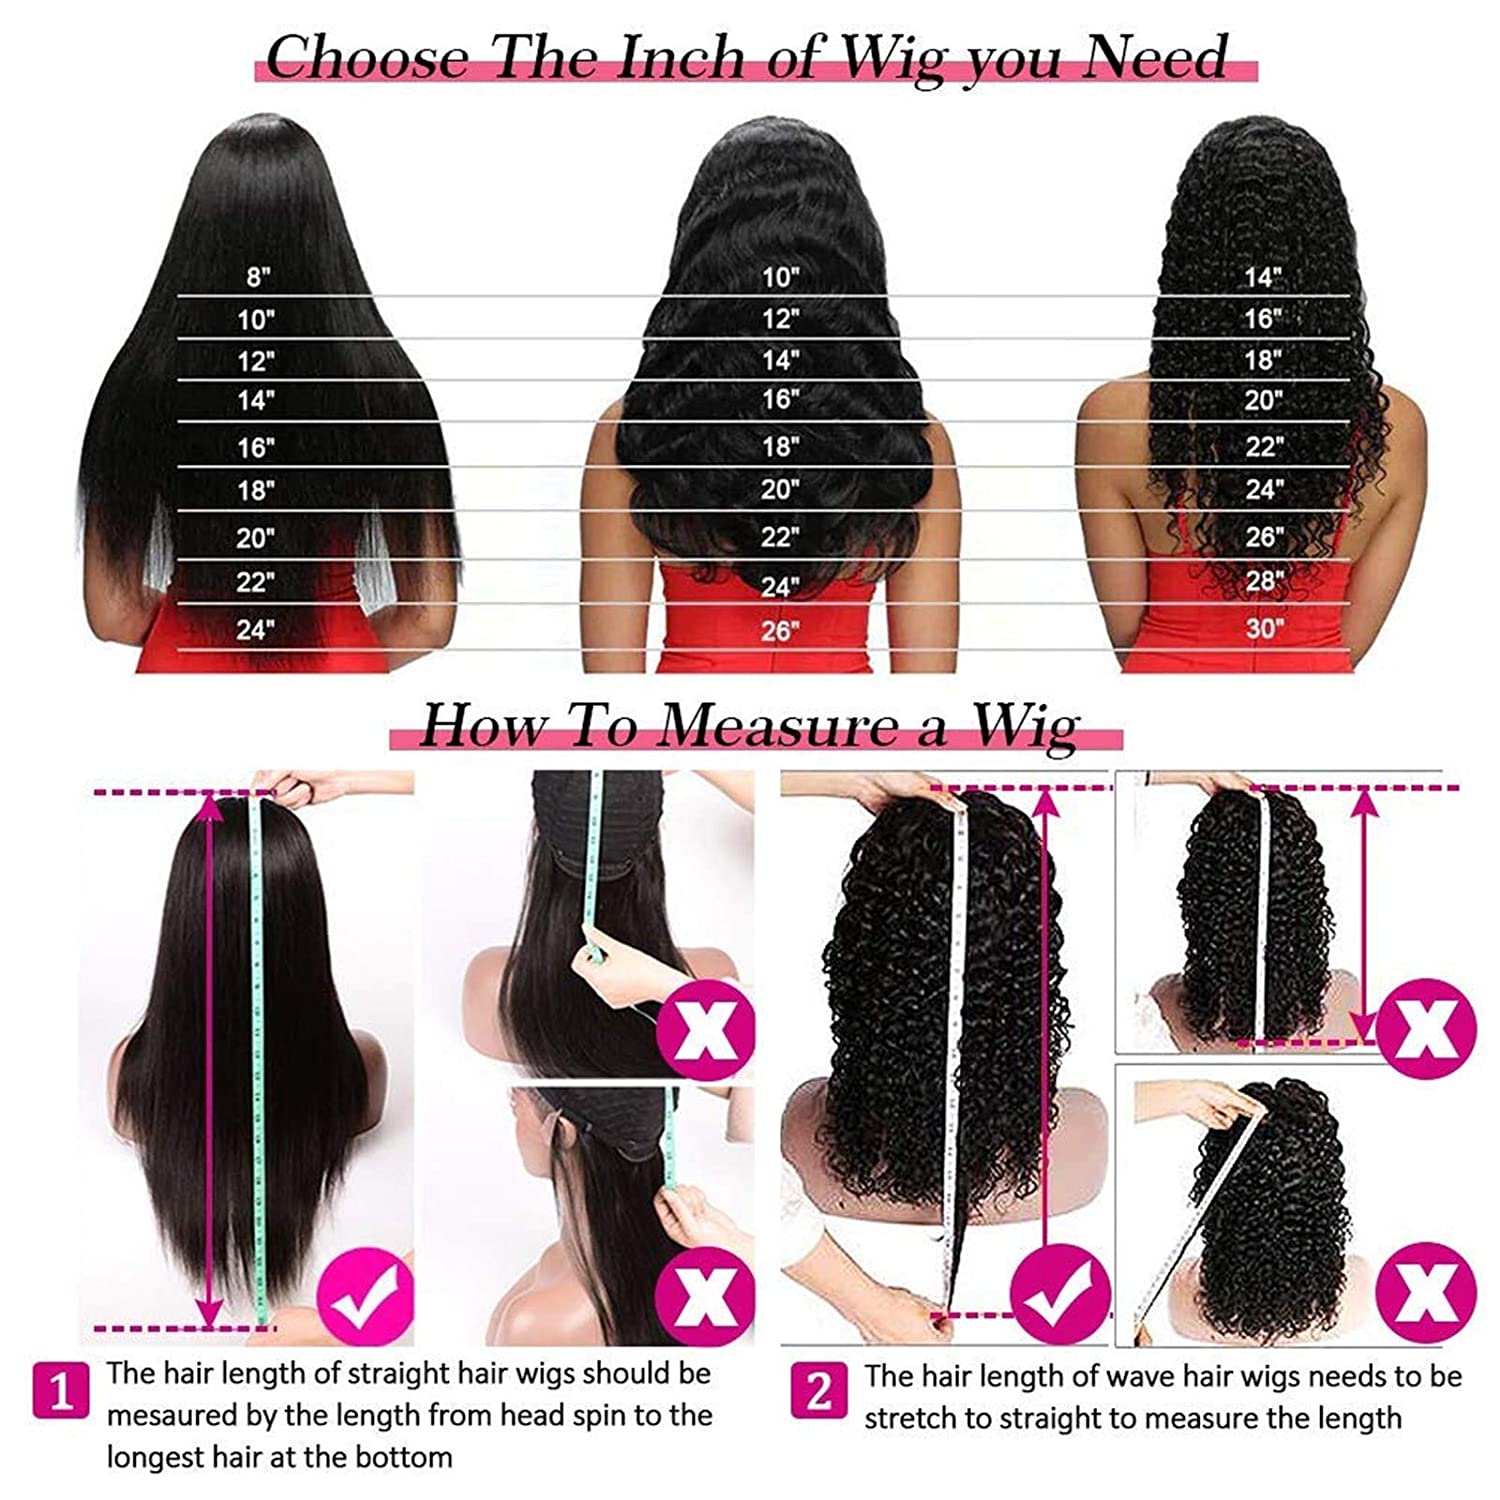 Gluna Hair Body Wave Headband Wig Virgin Human Hair Wigs For Black Women